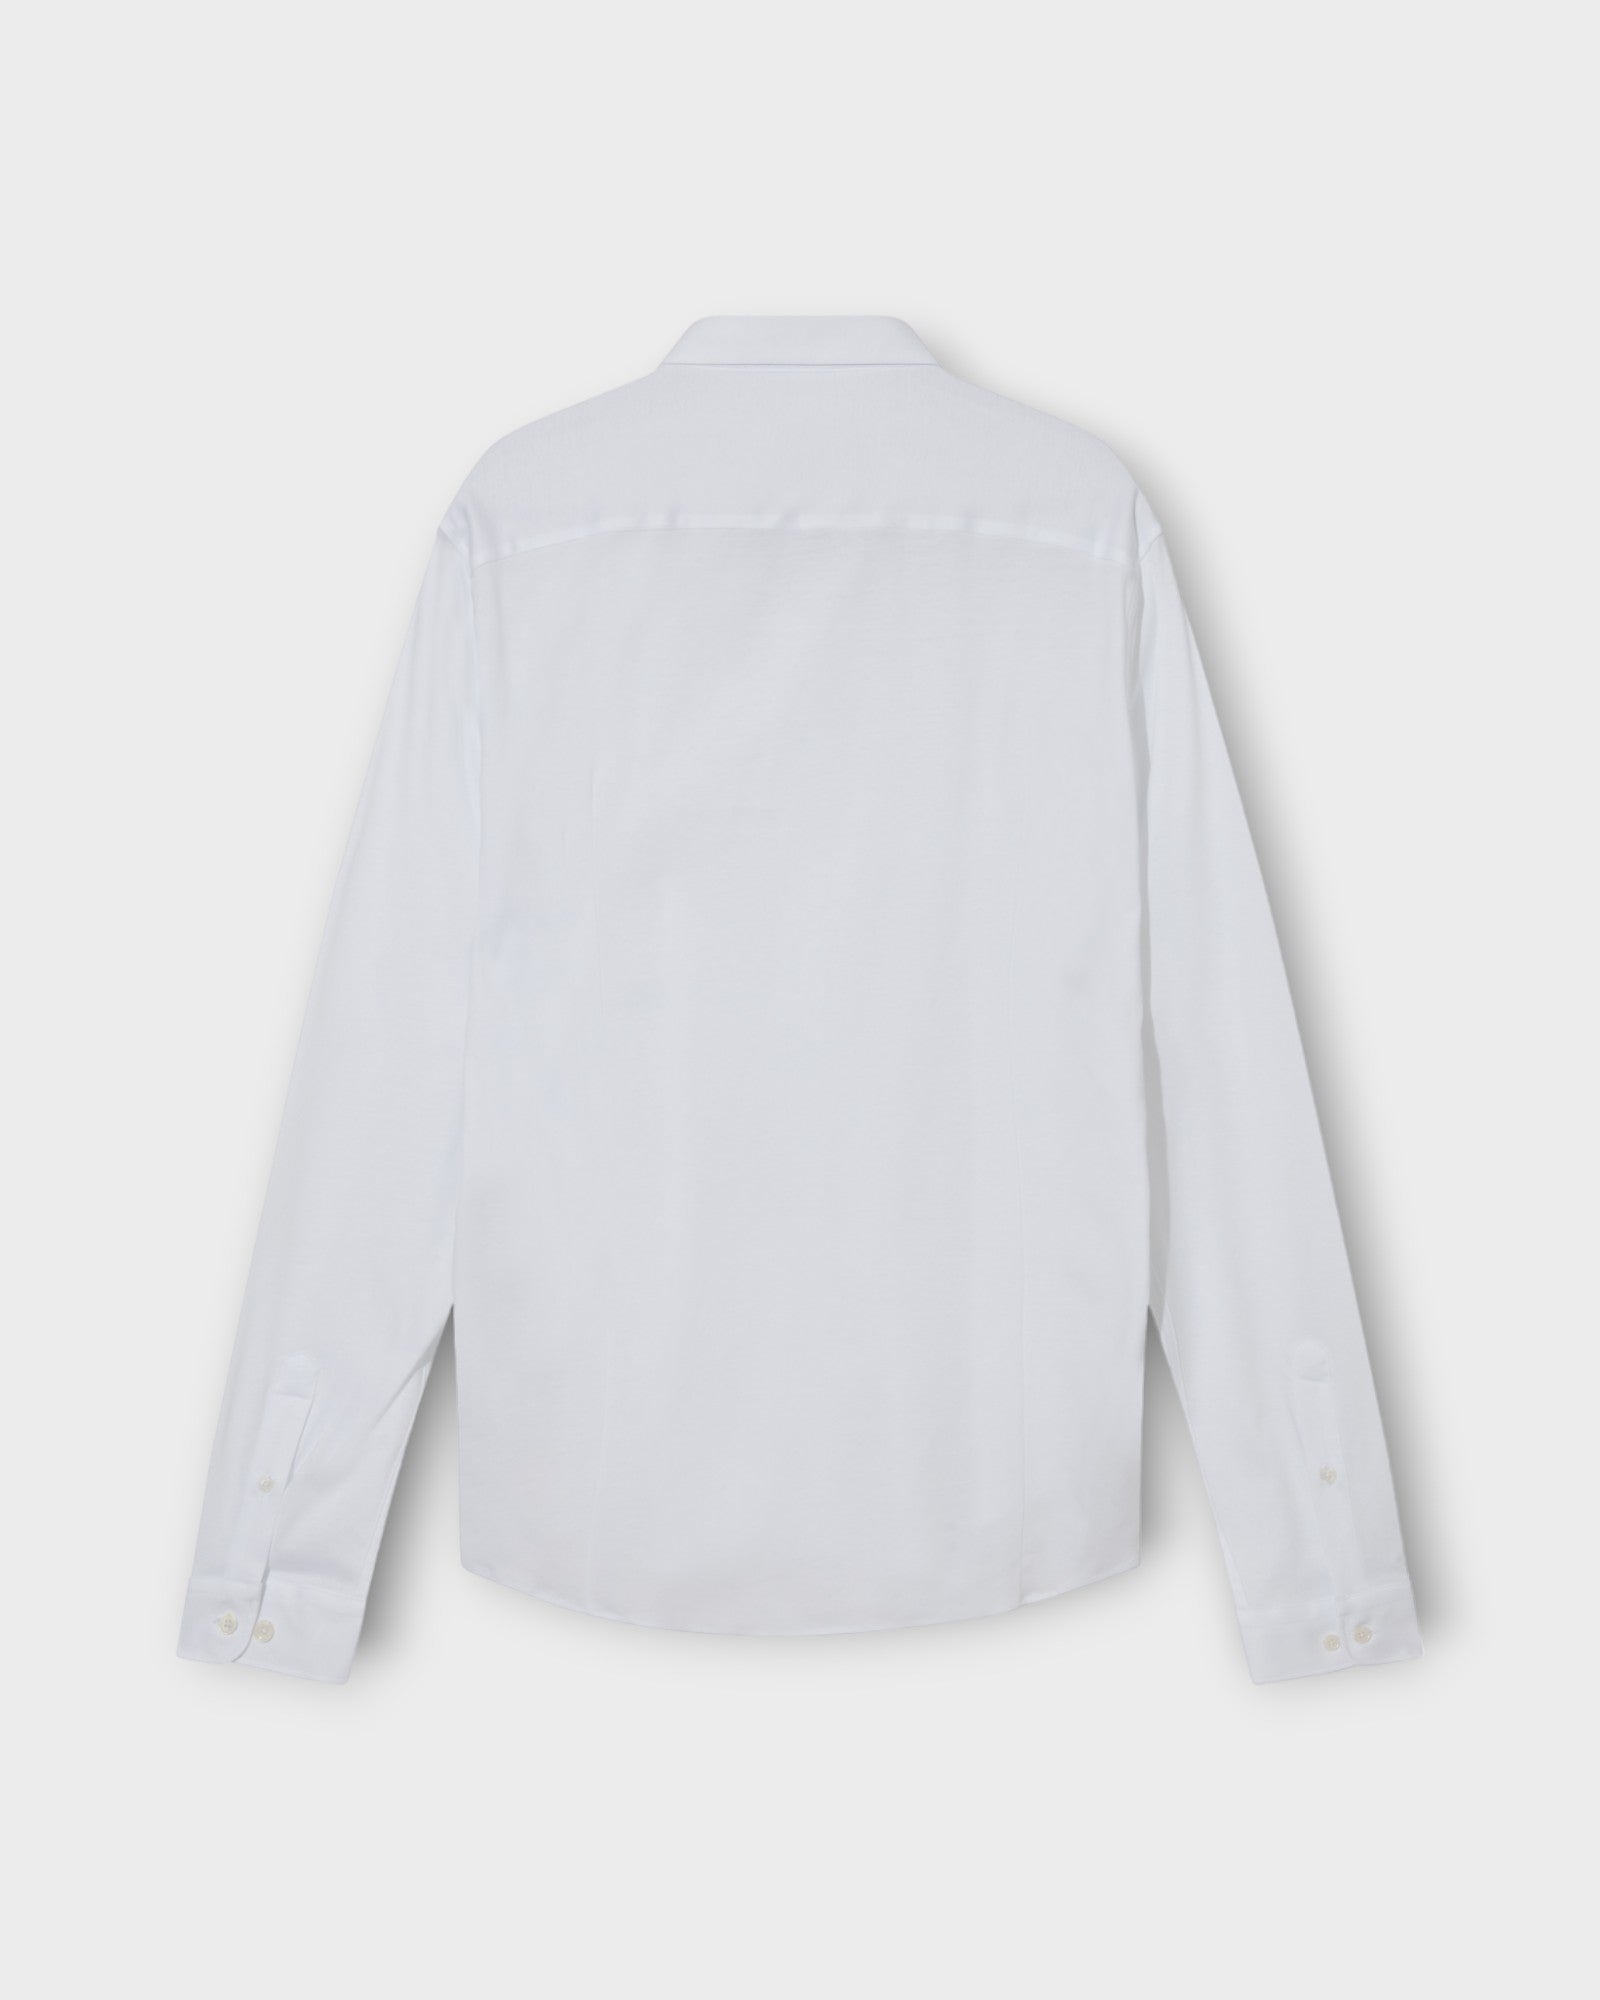 Marco Crunch Jersey Shirt White fra Mos Mosh Gallery. Langærmet hvid herre skjorte. Her set bagfra.